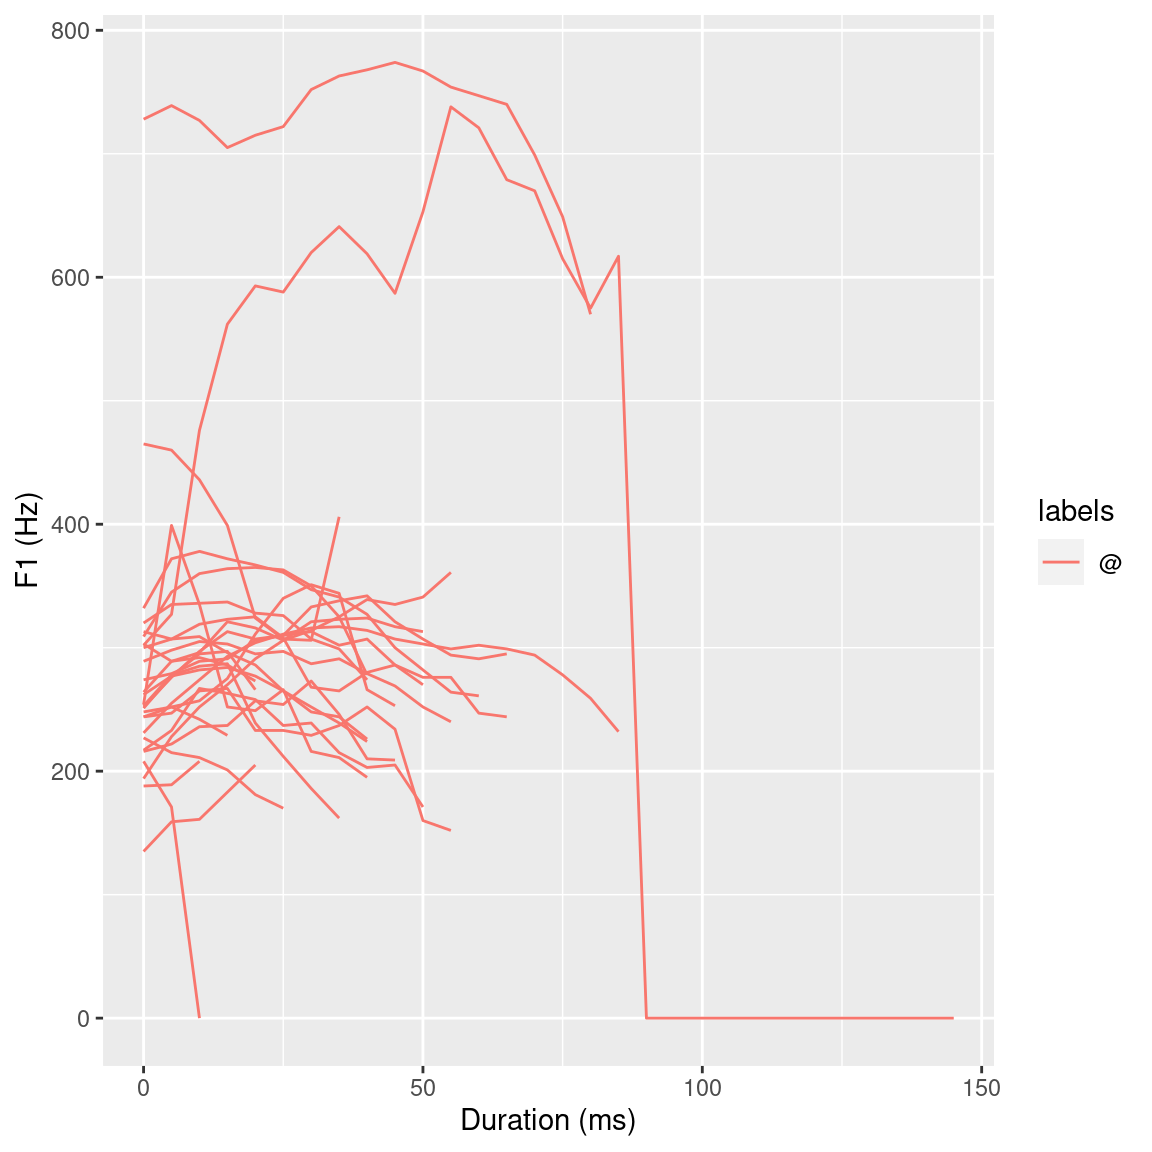 `ggplot()` plots of all F1 *\@* vowel trajectories.